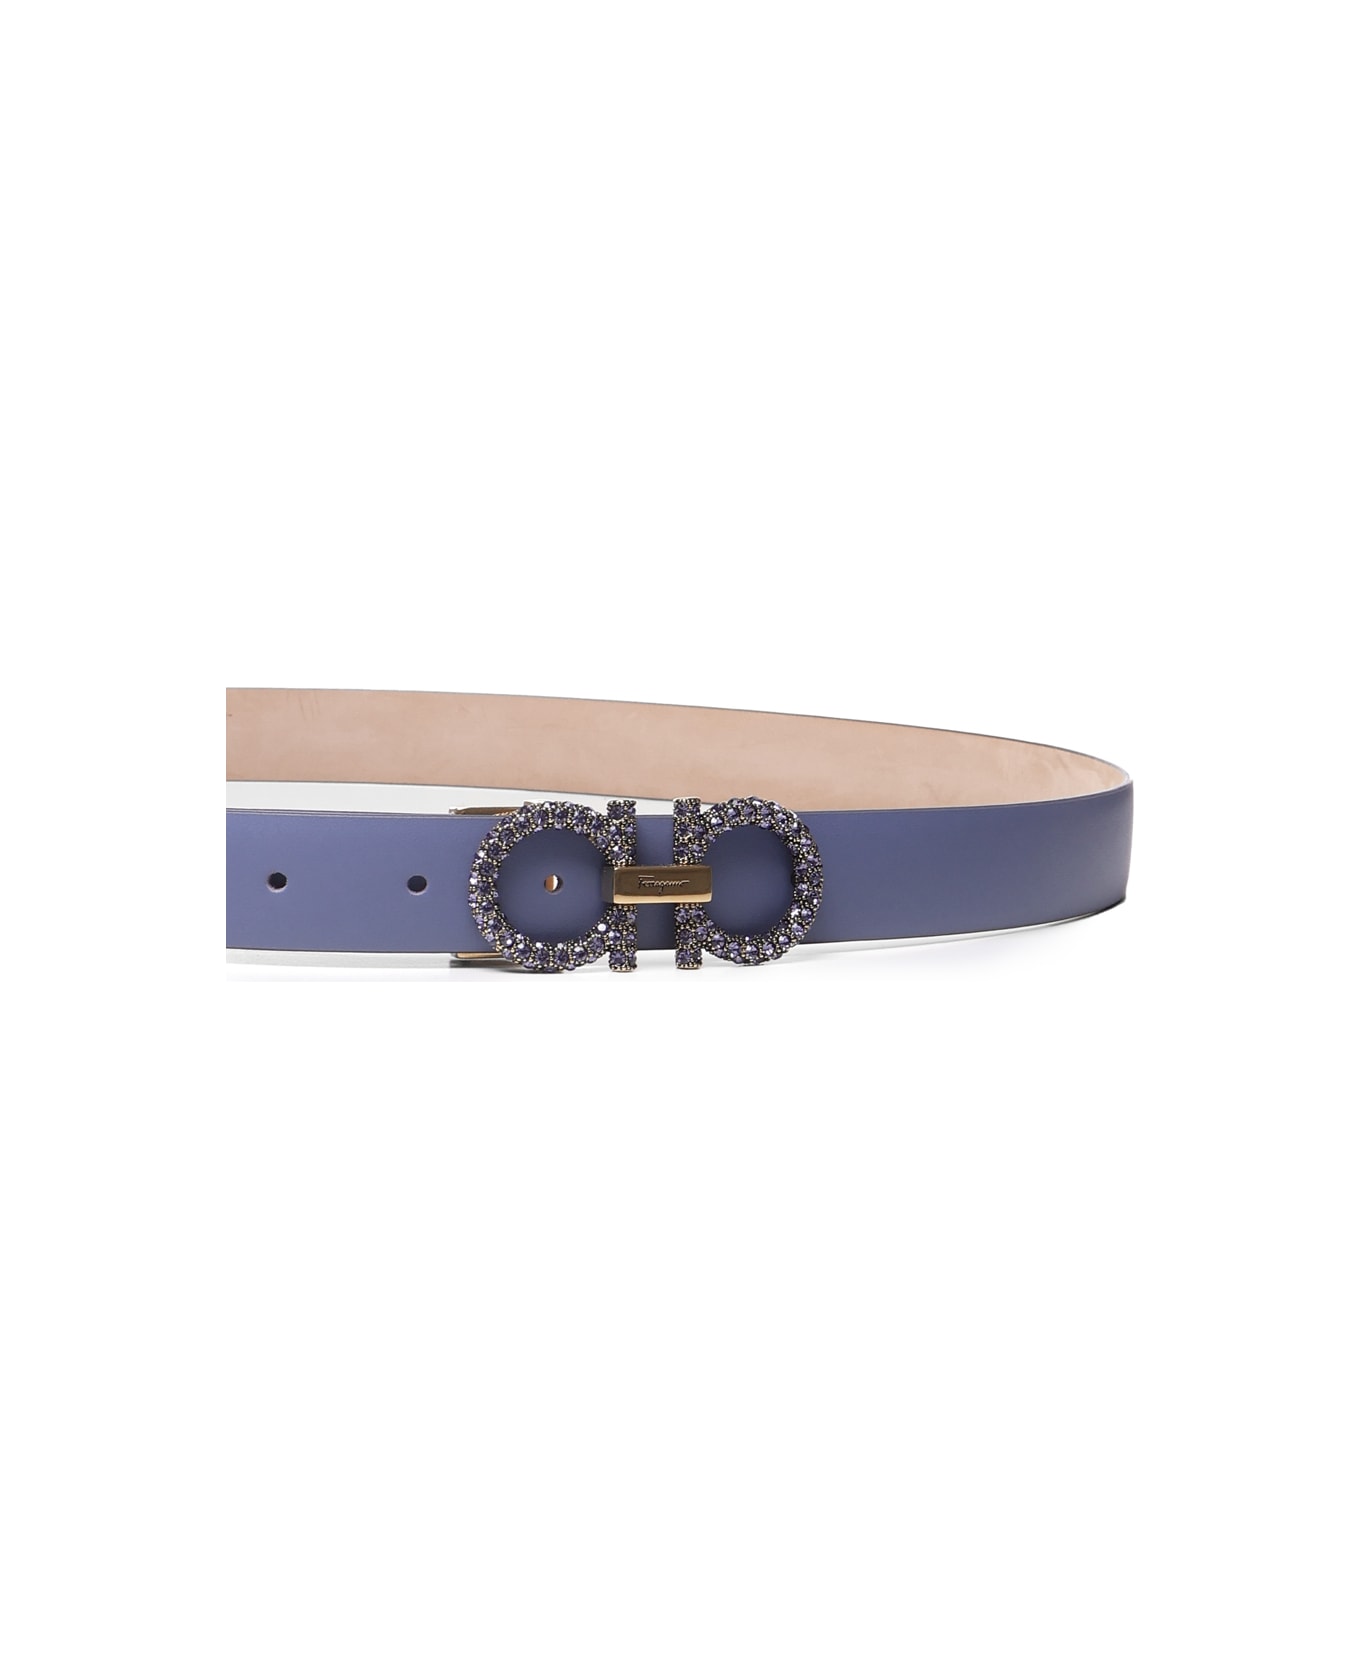 Ferragamo Leather Belt With Embellished Gancino Buckle - Blue